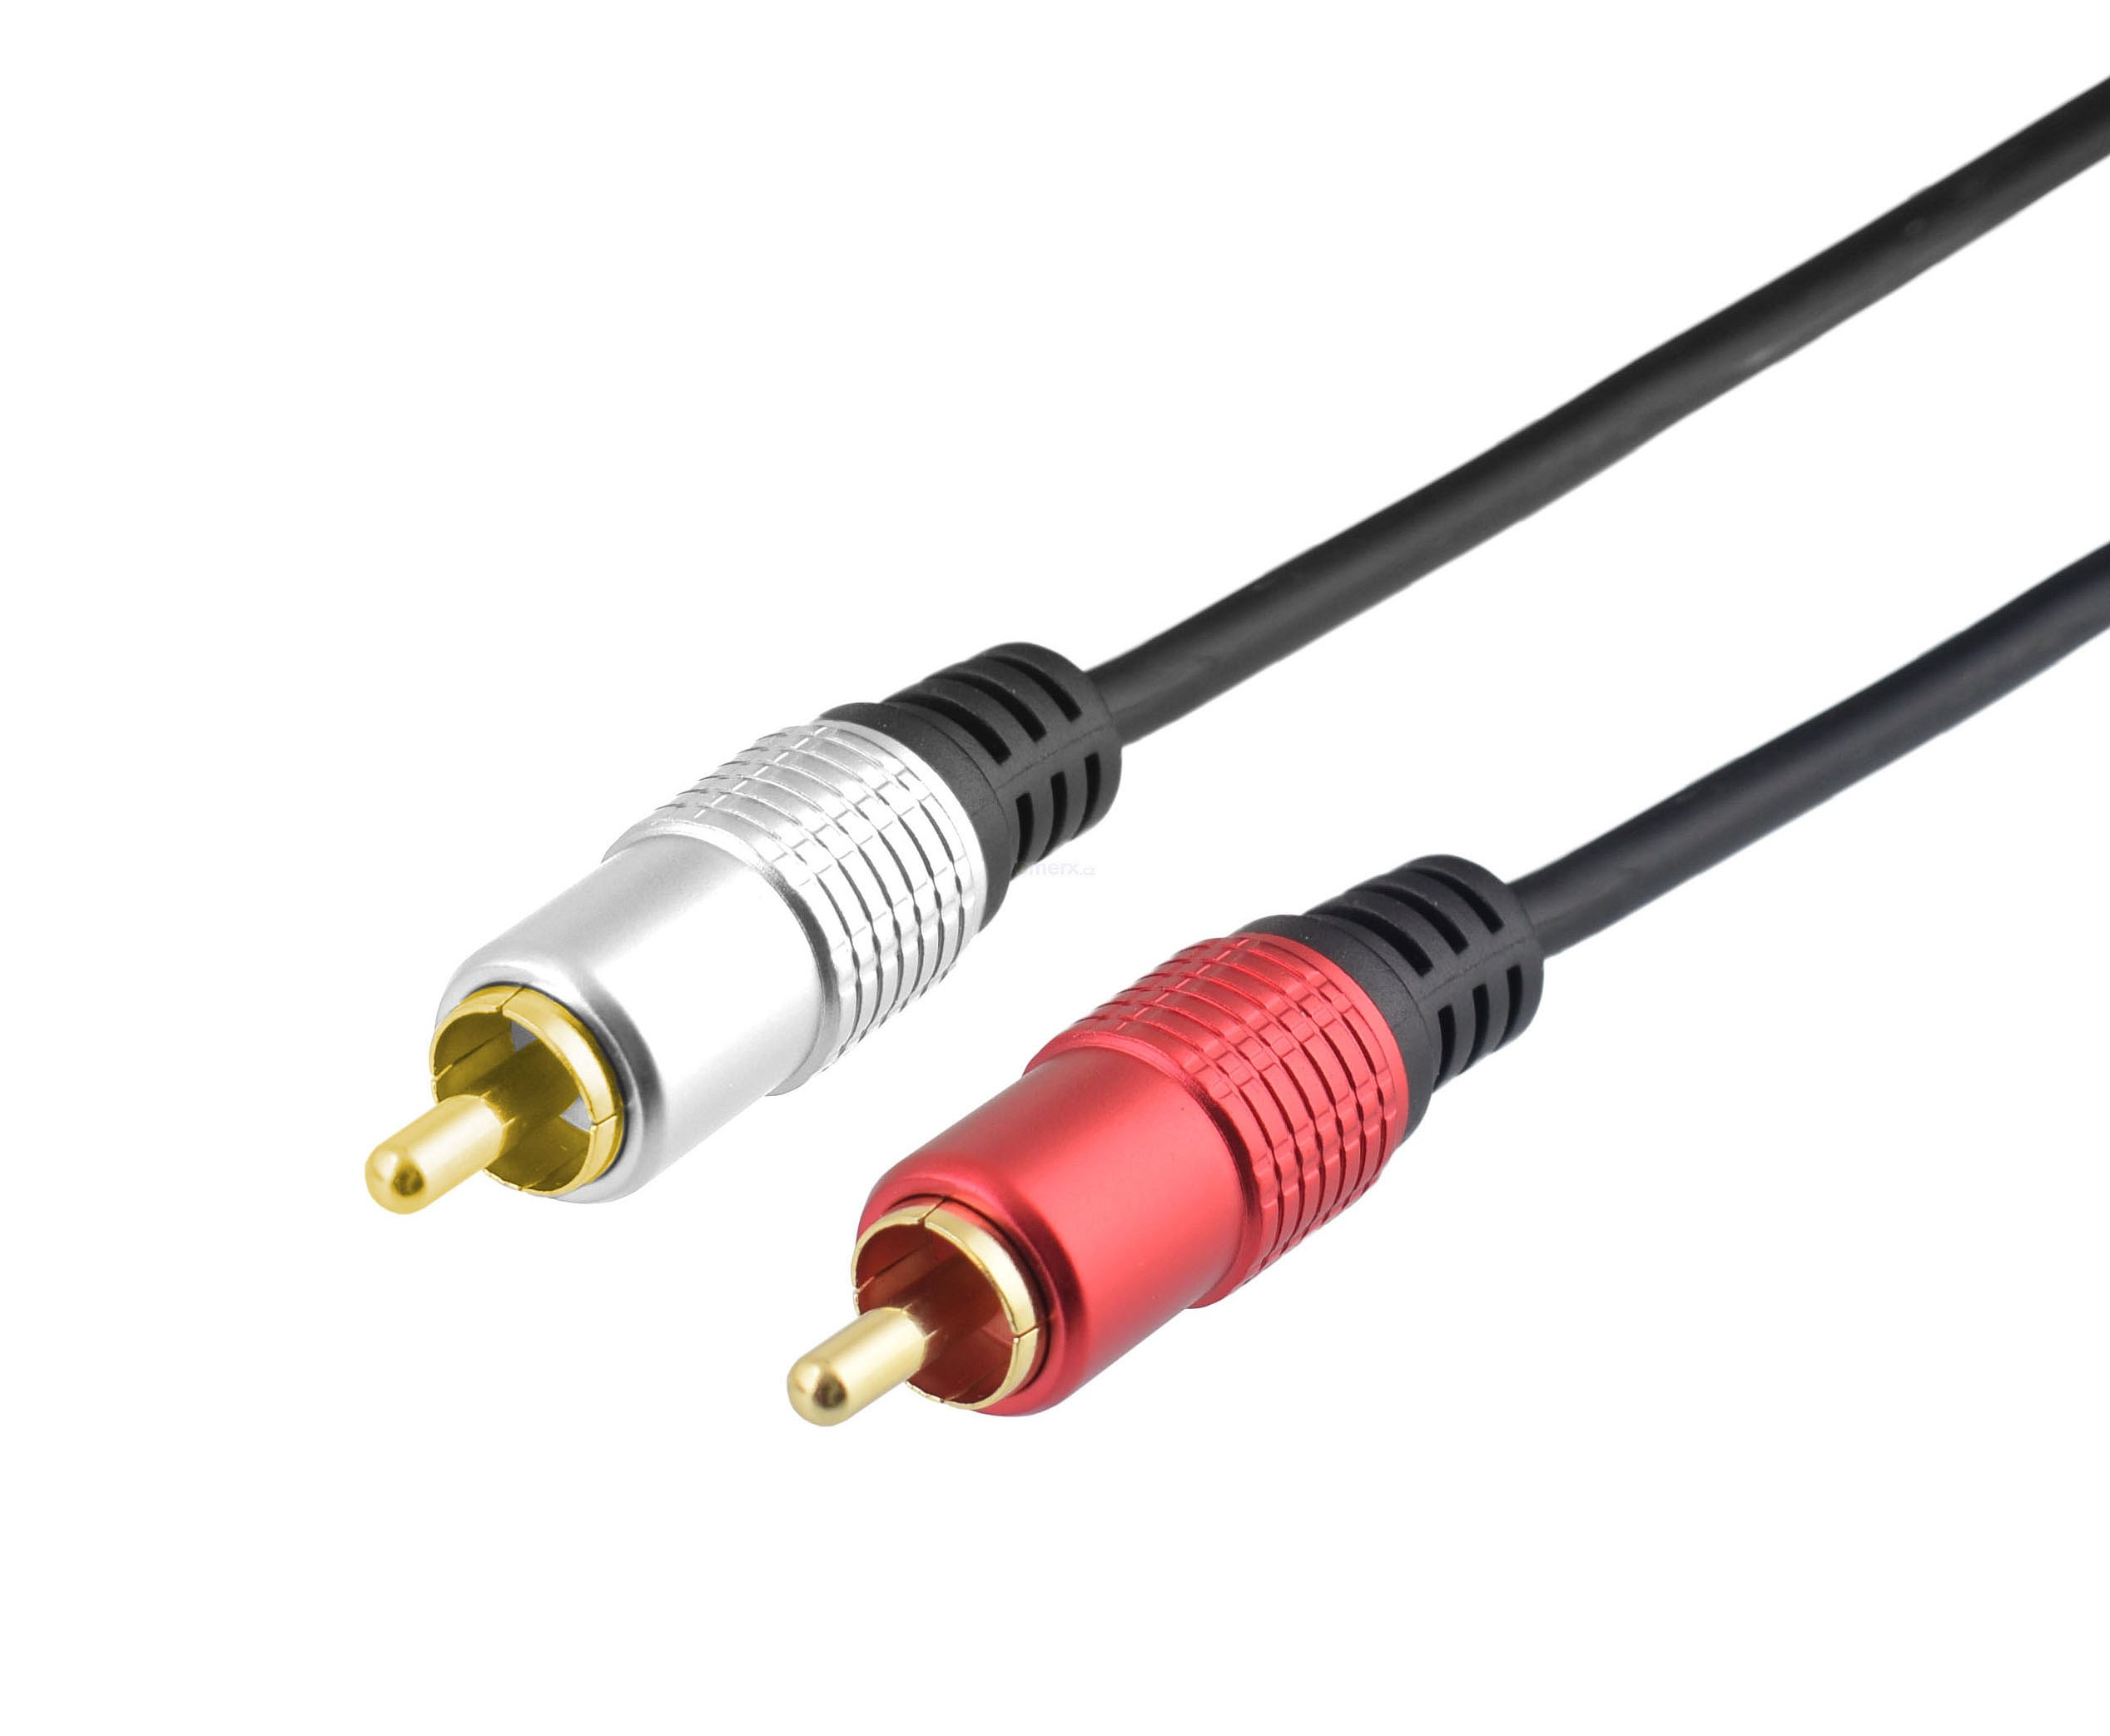 Propojovací audio kabel 2x CINCH vidlice na 2x CINCH vidlice STEREO, 1m. (HS-RR001-1)